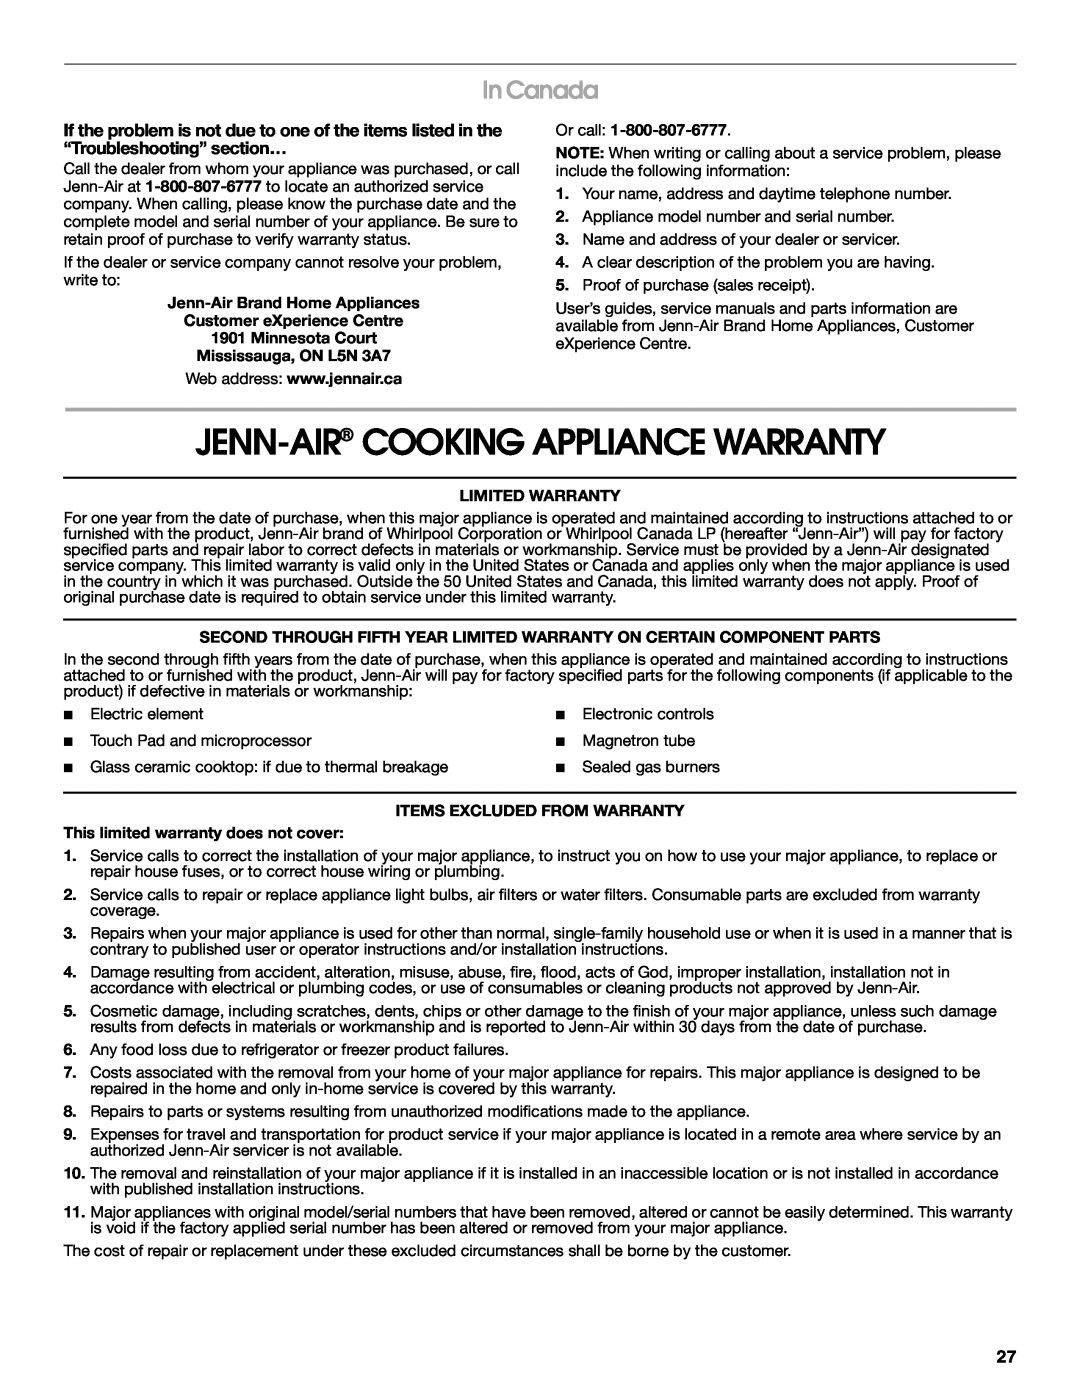 Jenn-Air JGS9900 manual Jenn-Air Cooking Appliance Warranty, In Canada 